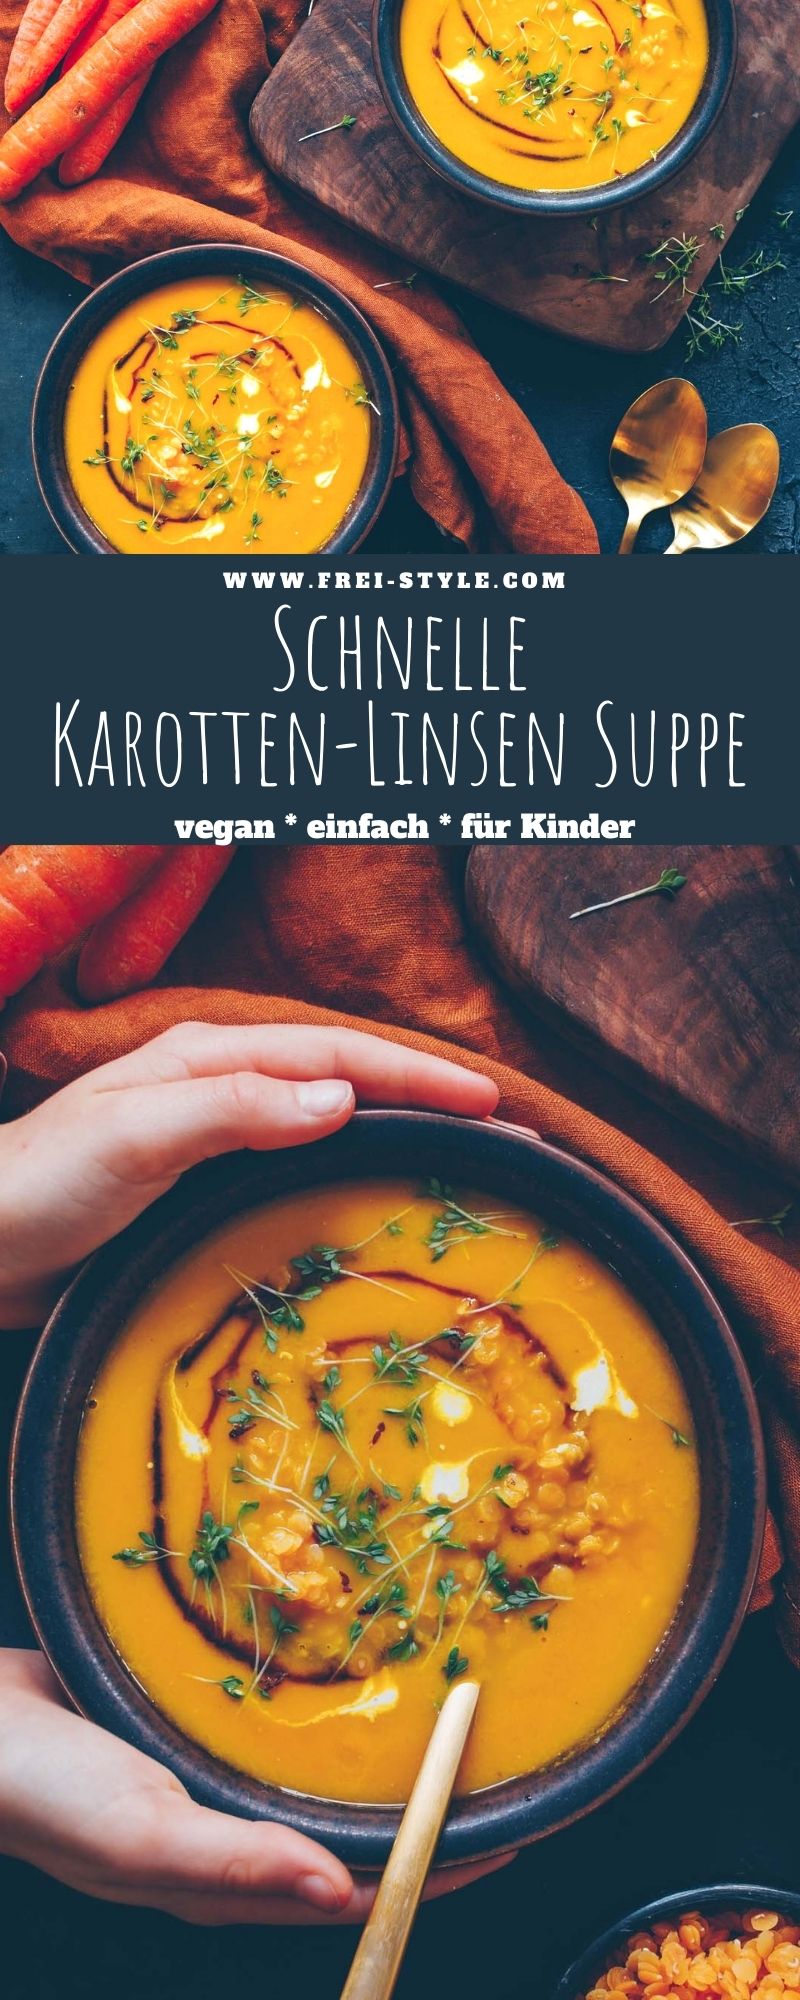 Rüebli-Linsen Suppe